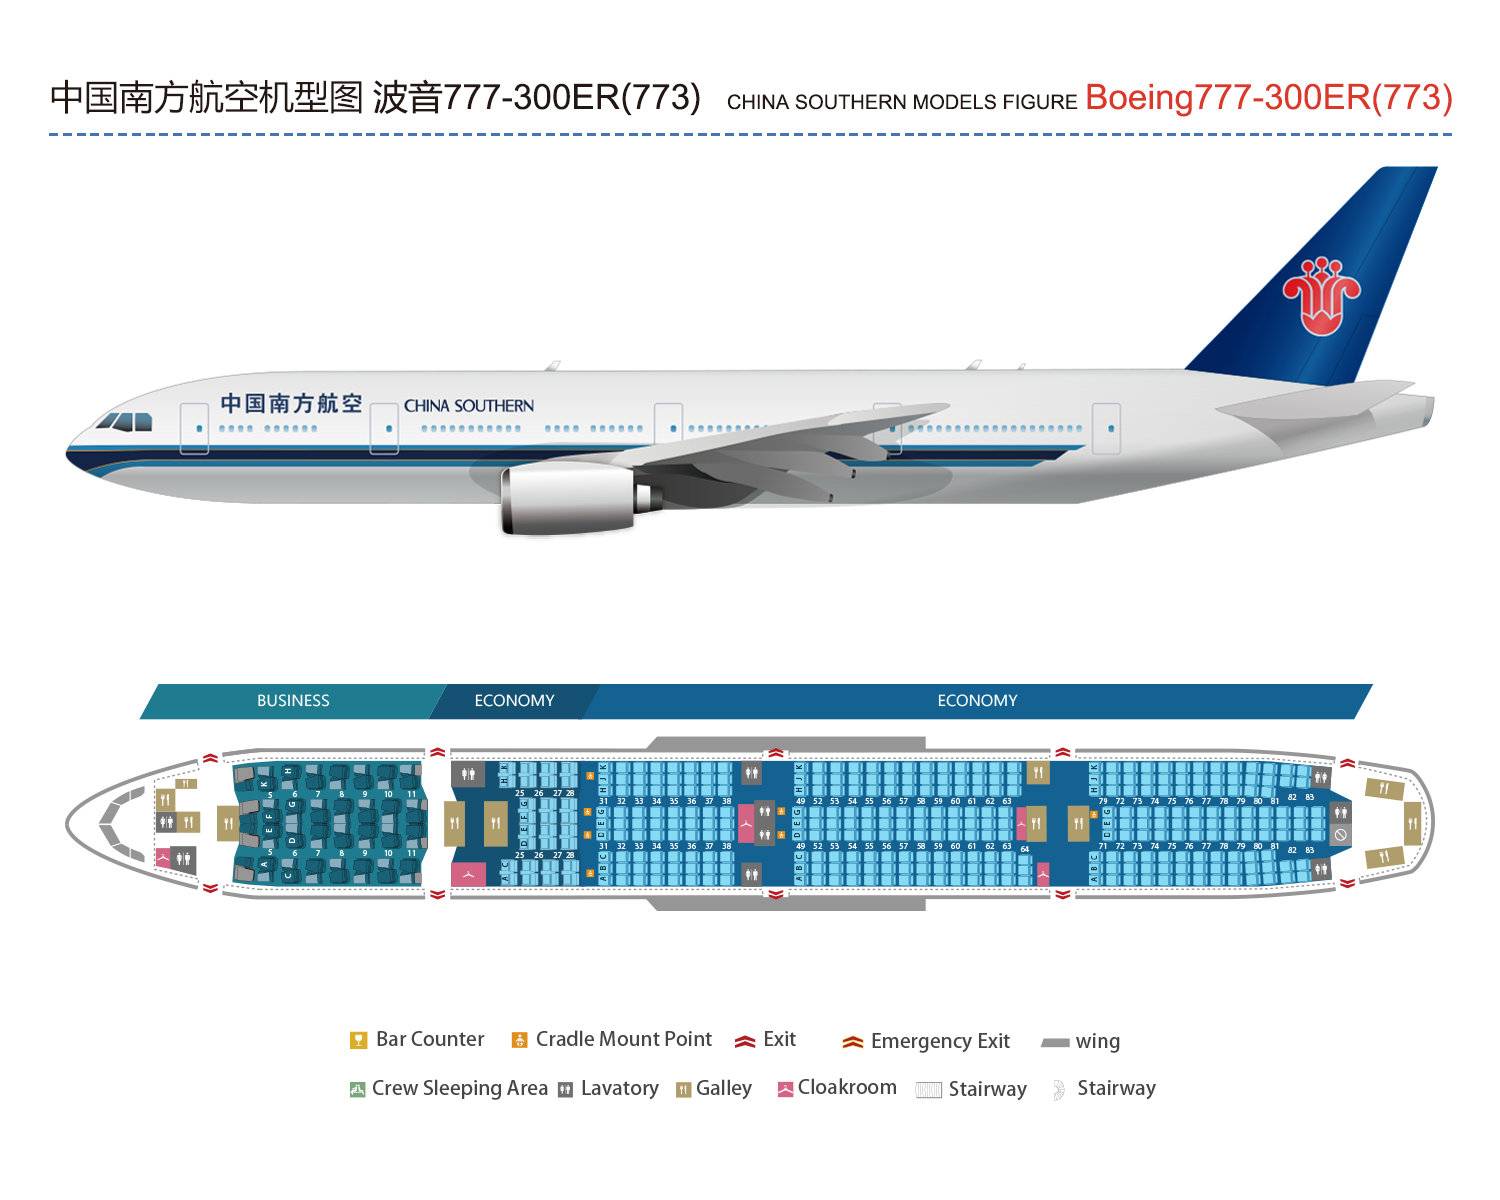 Боинг 777 300ер аэрофлота схема салона. Схема самолёта Боинг 777-300 er. Схема самолета Boeing 777-300er Аэрофлот. Расположение кресел в Боинге 777-300er Аэрофлота. Салон самолета Boeing 777-300er.